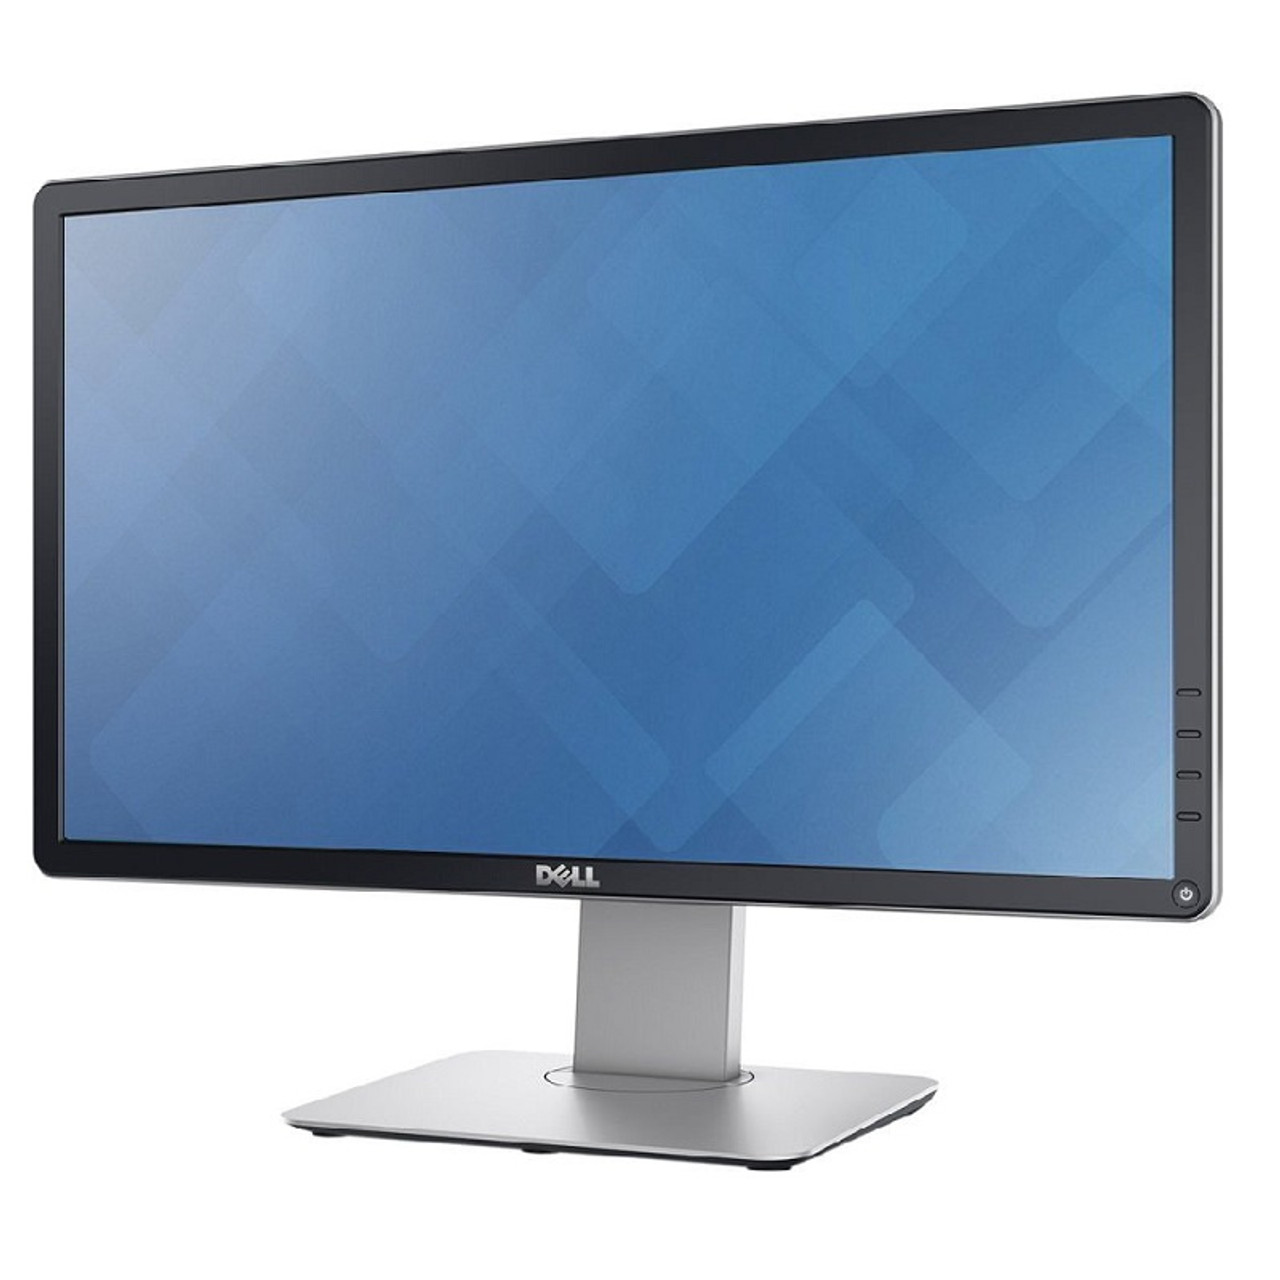 320-9791 - Dell P2214H 22-inch TFT Active Matrix IPS LED-Backlit LCD Monitor FullHD 1920 x 1080